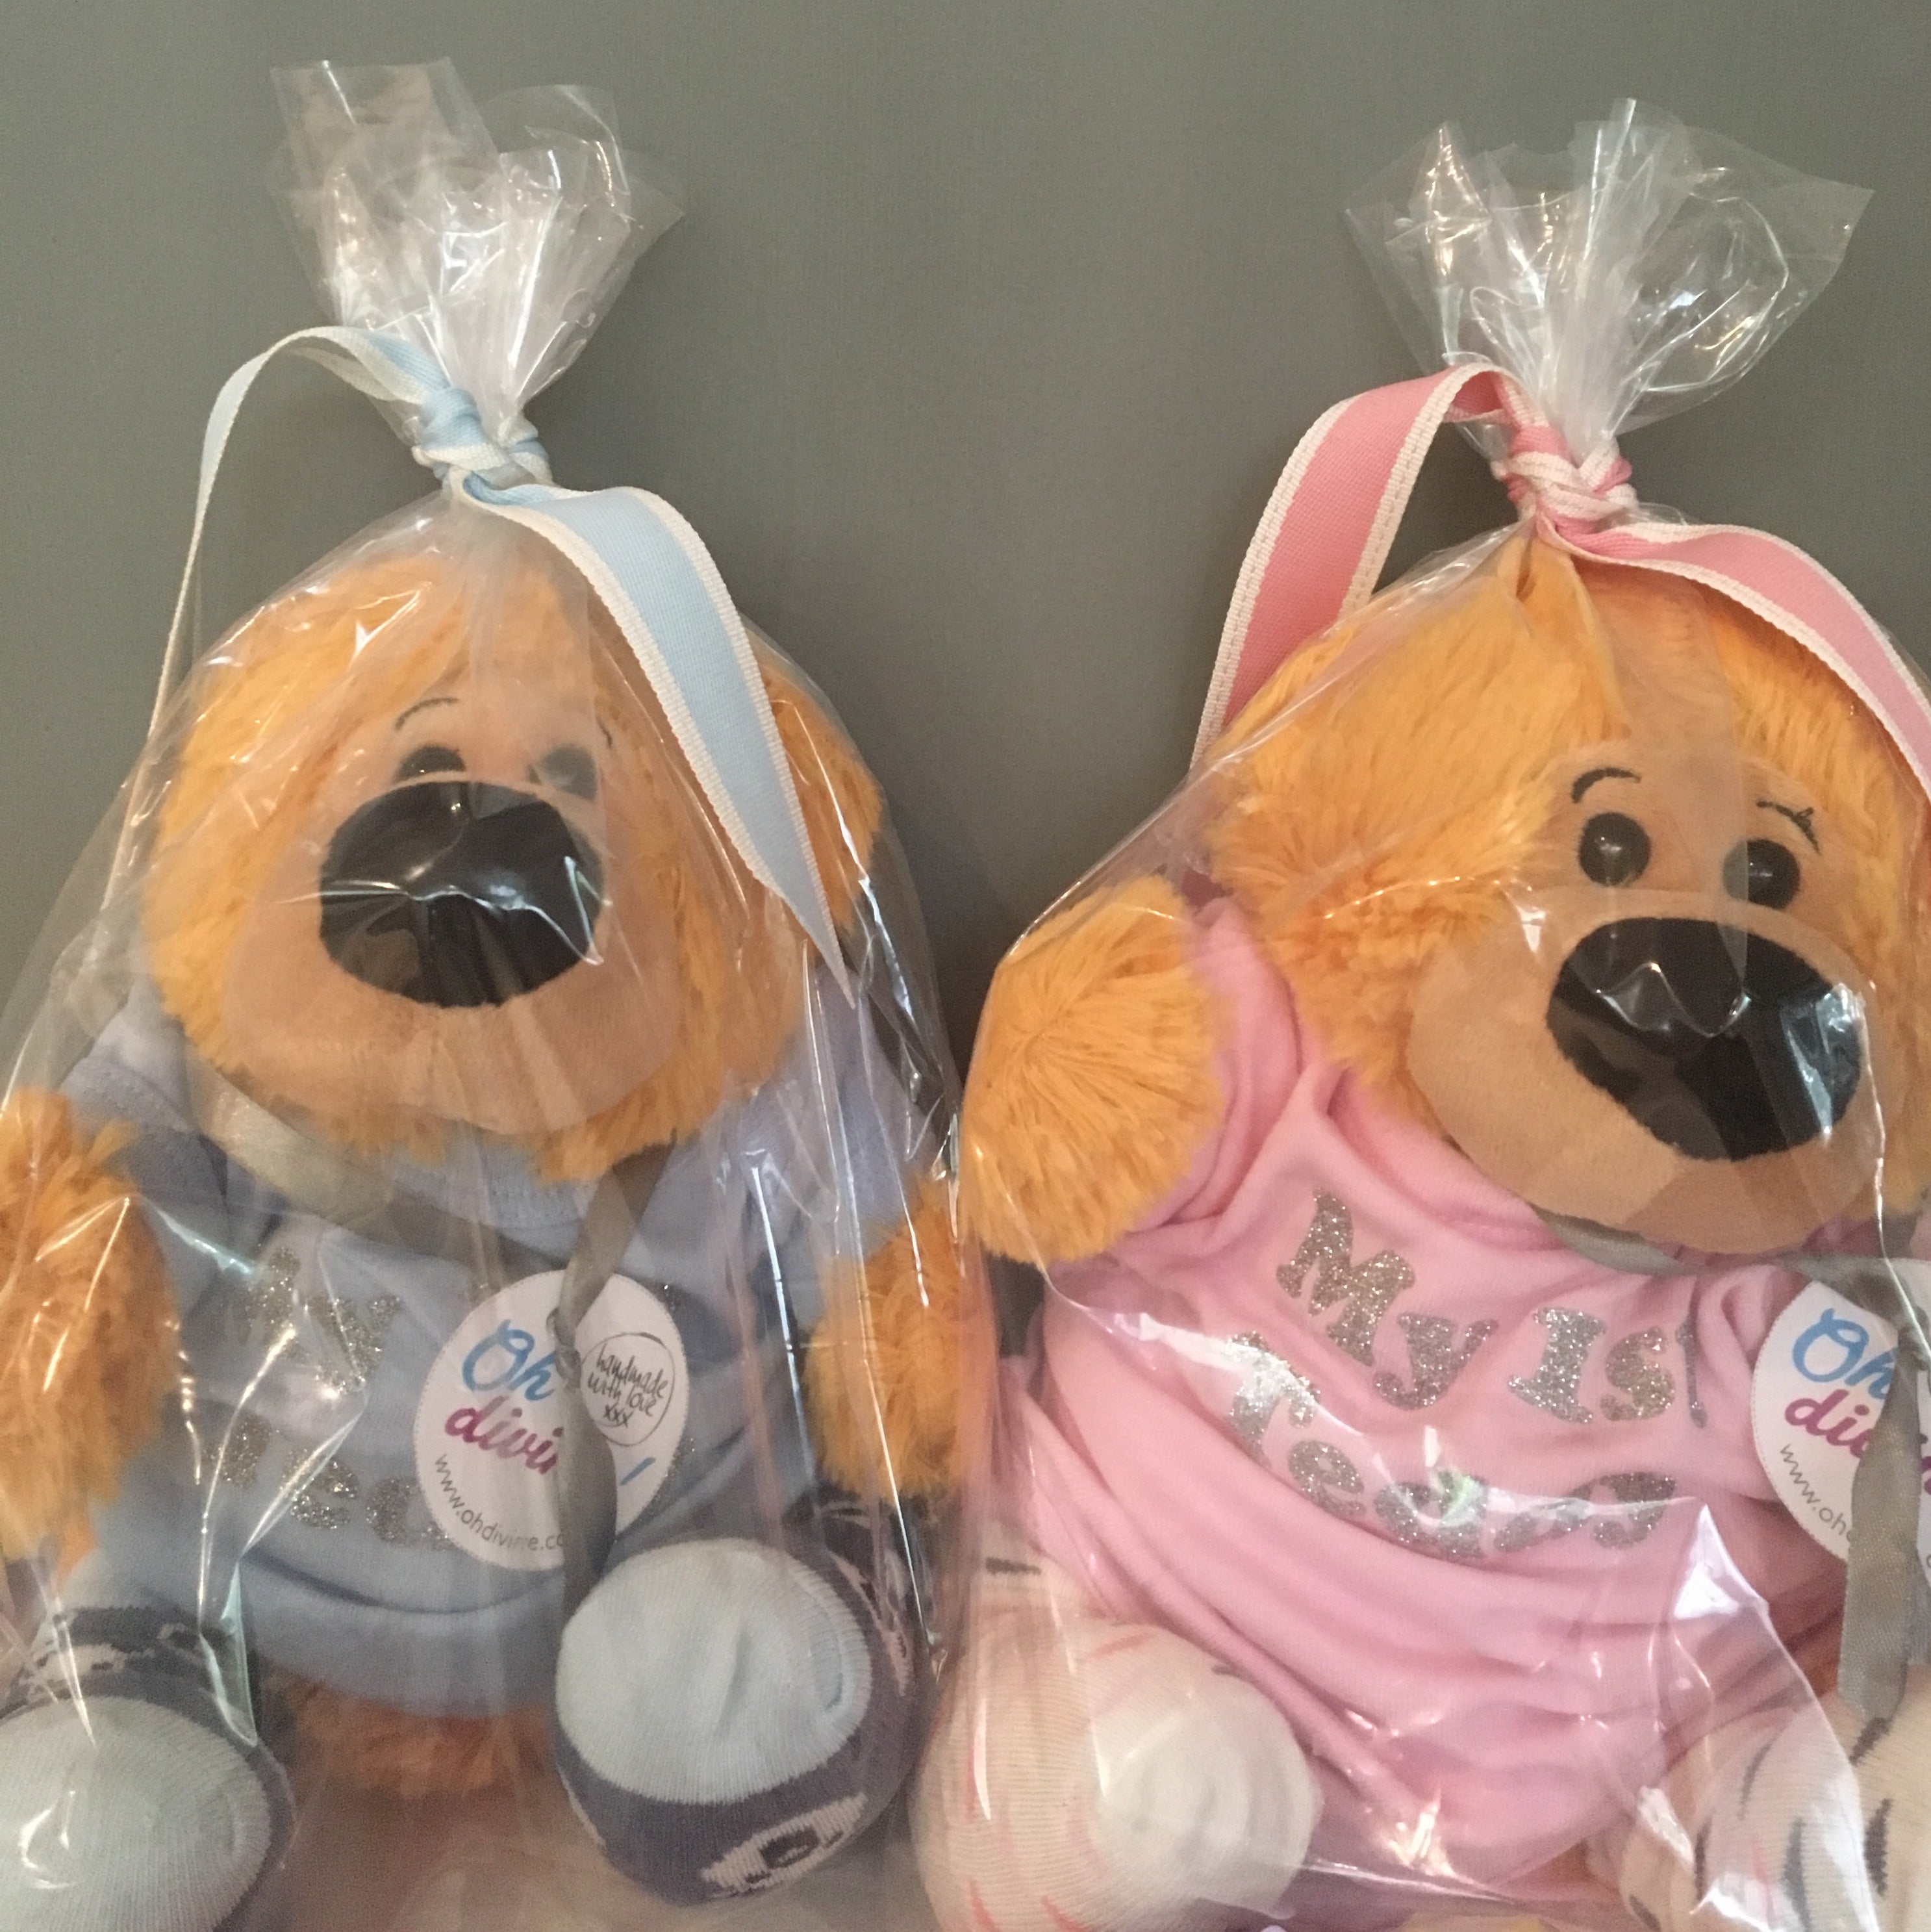 teddy bear gift online